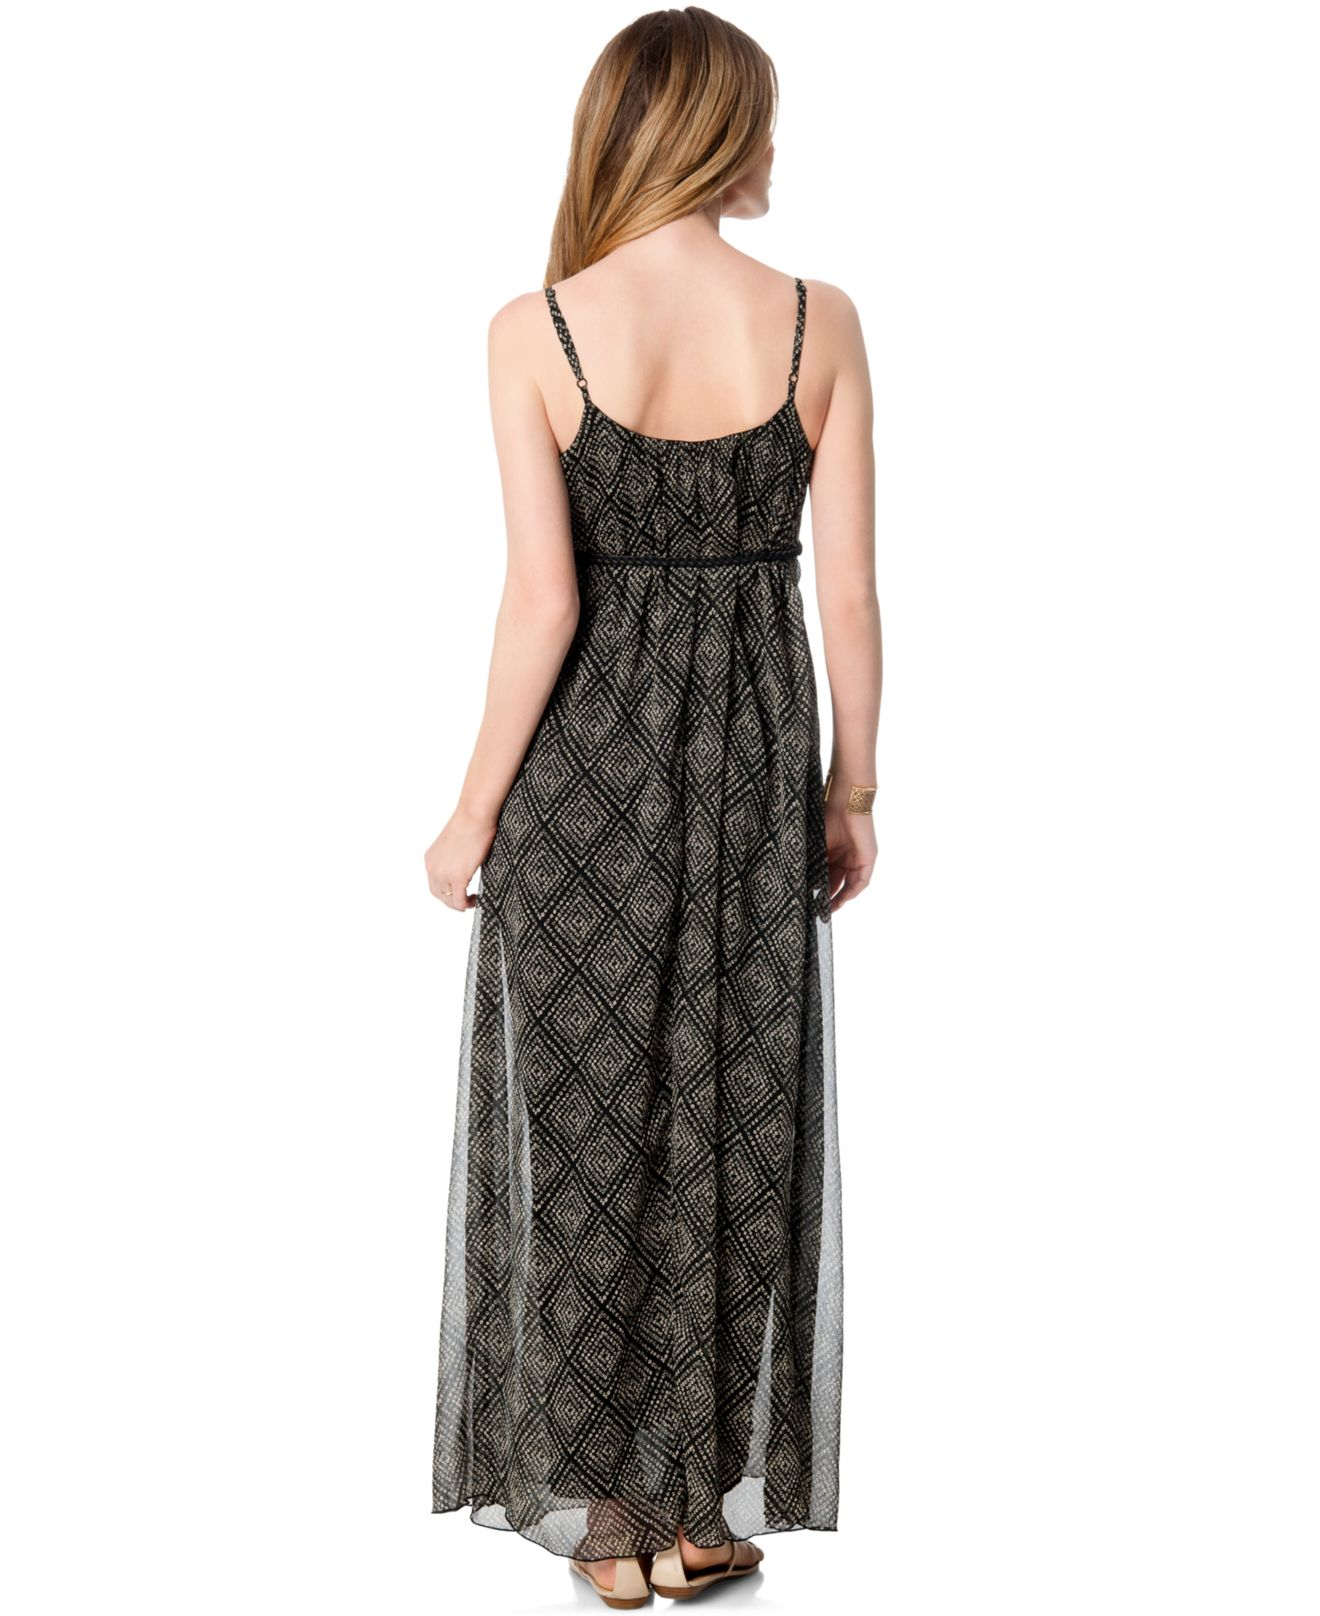 Lyst - Jessica Simpson Maternity Printed Maxi Dress in Black